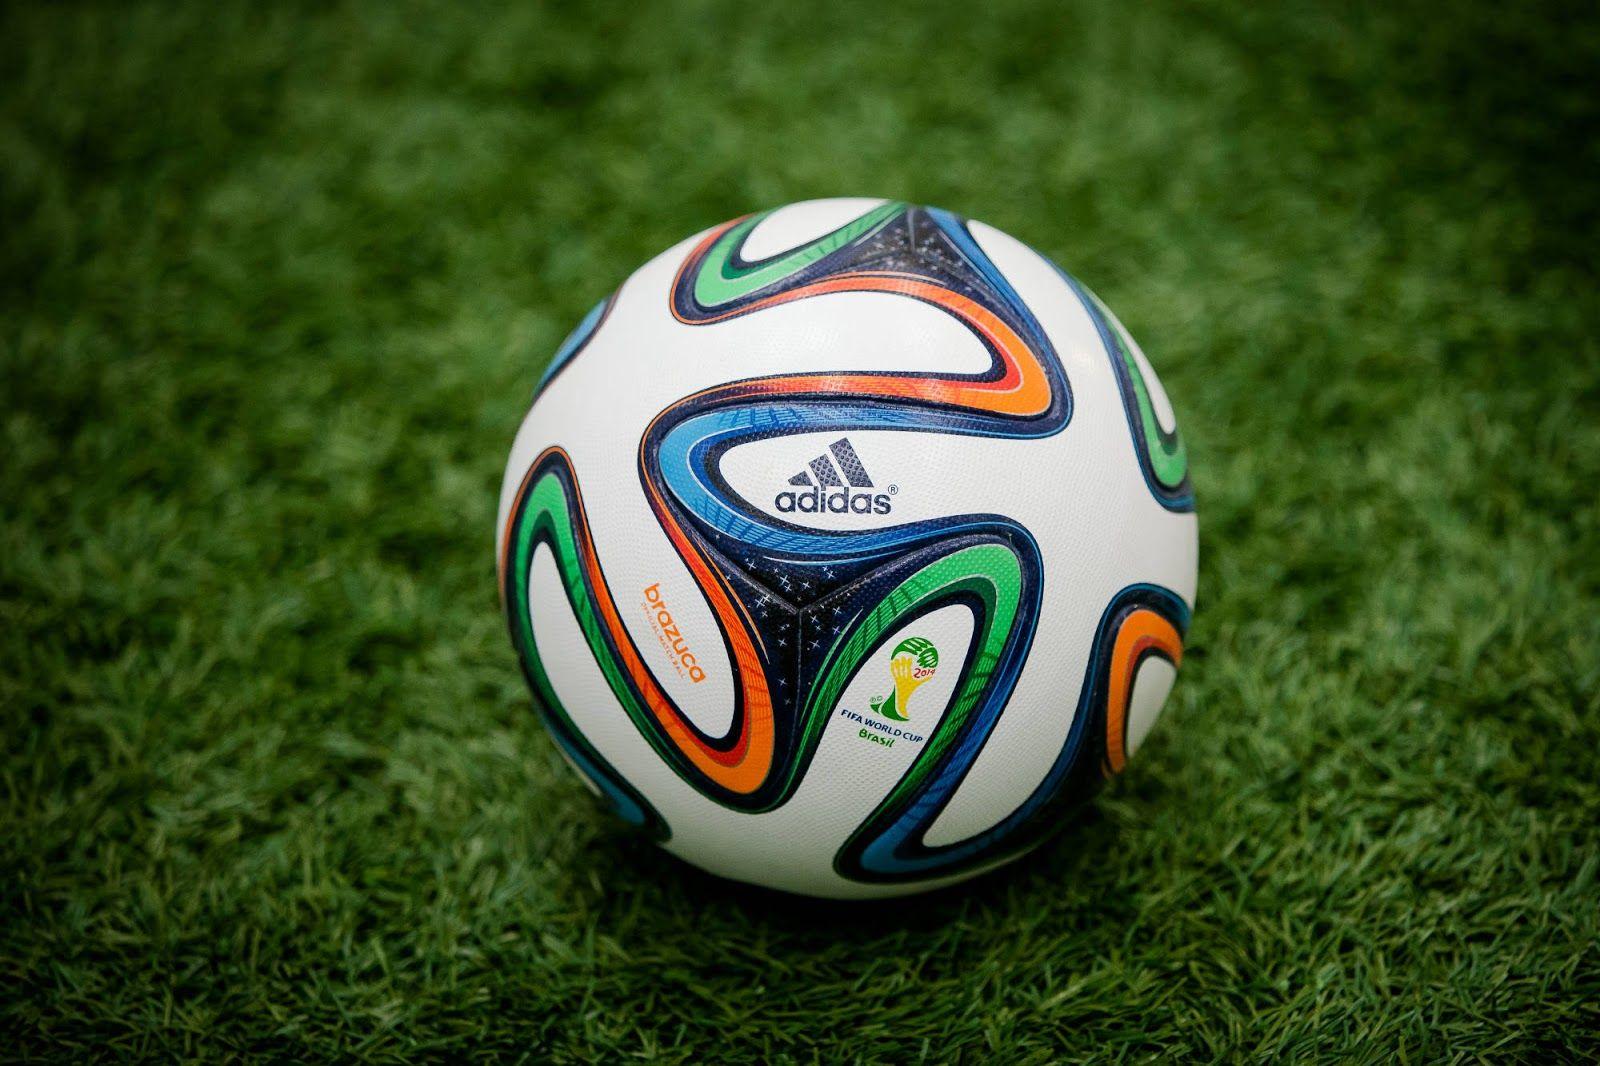 Adidas World Cup Football